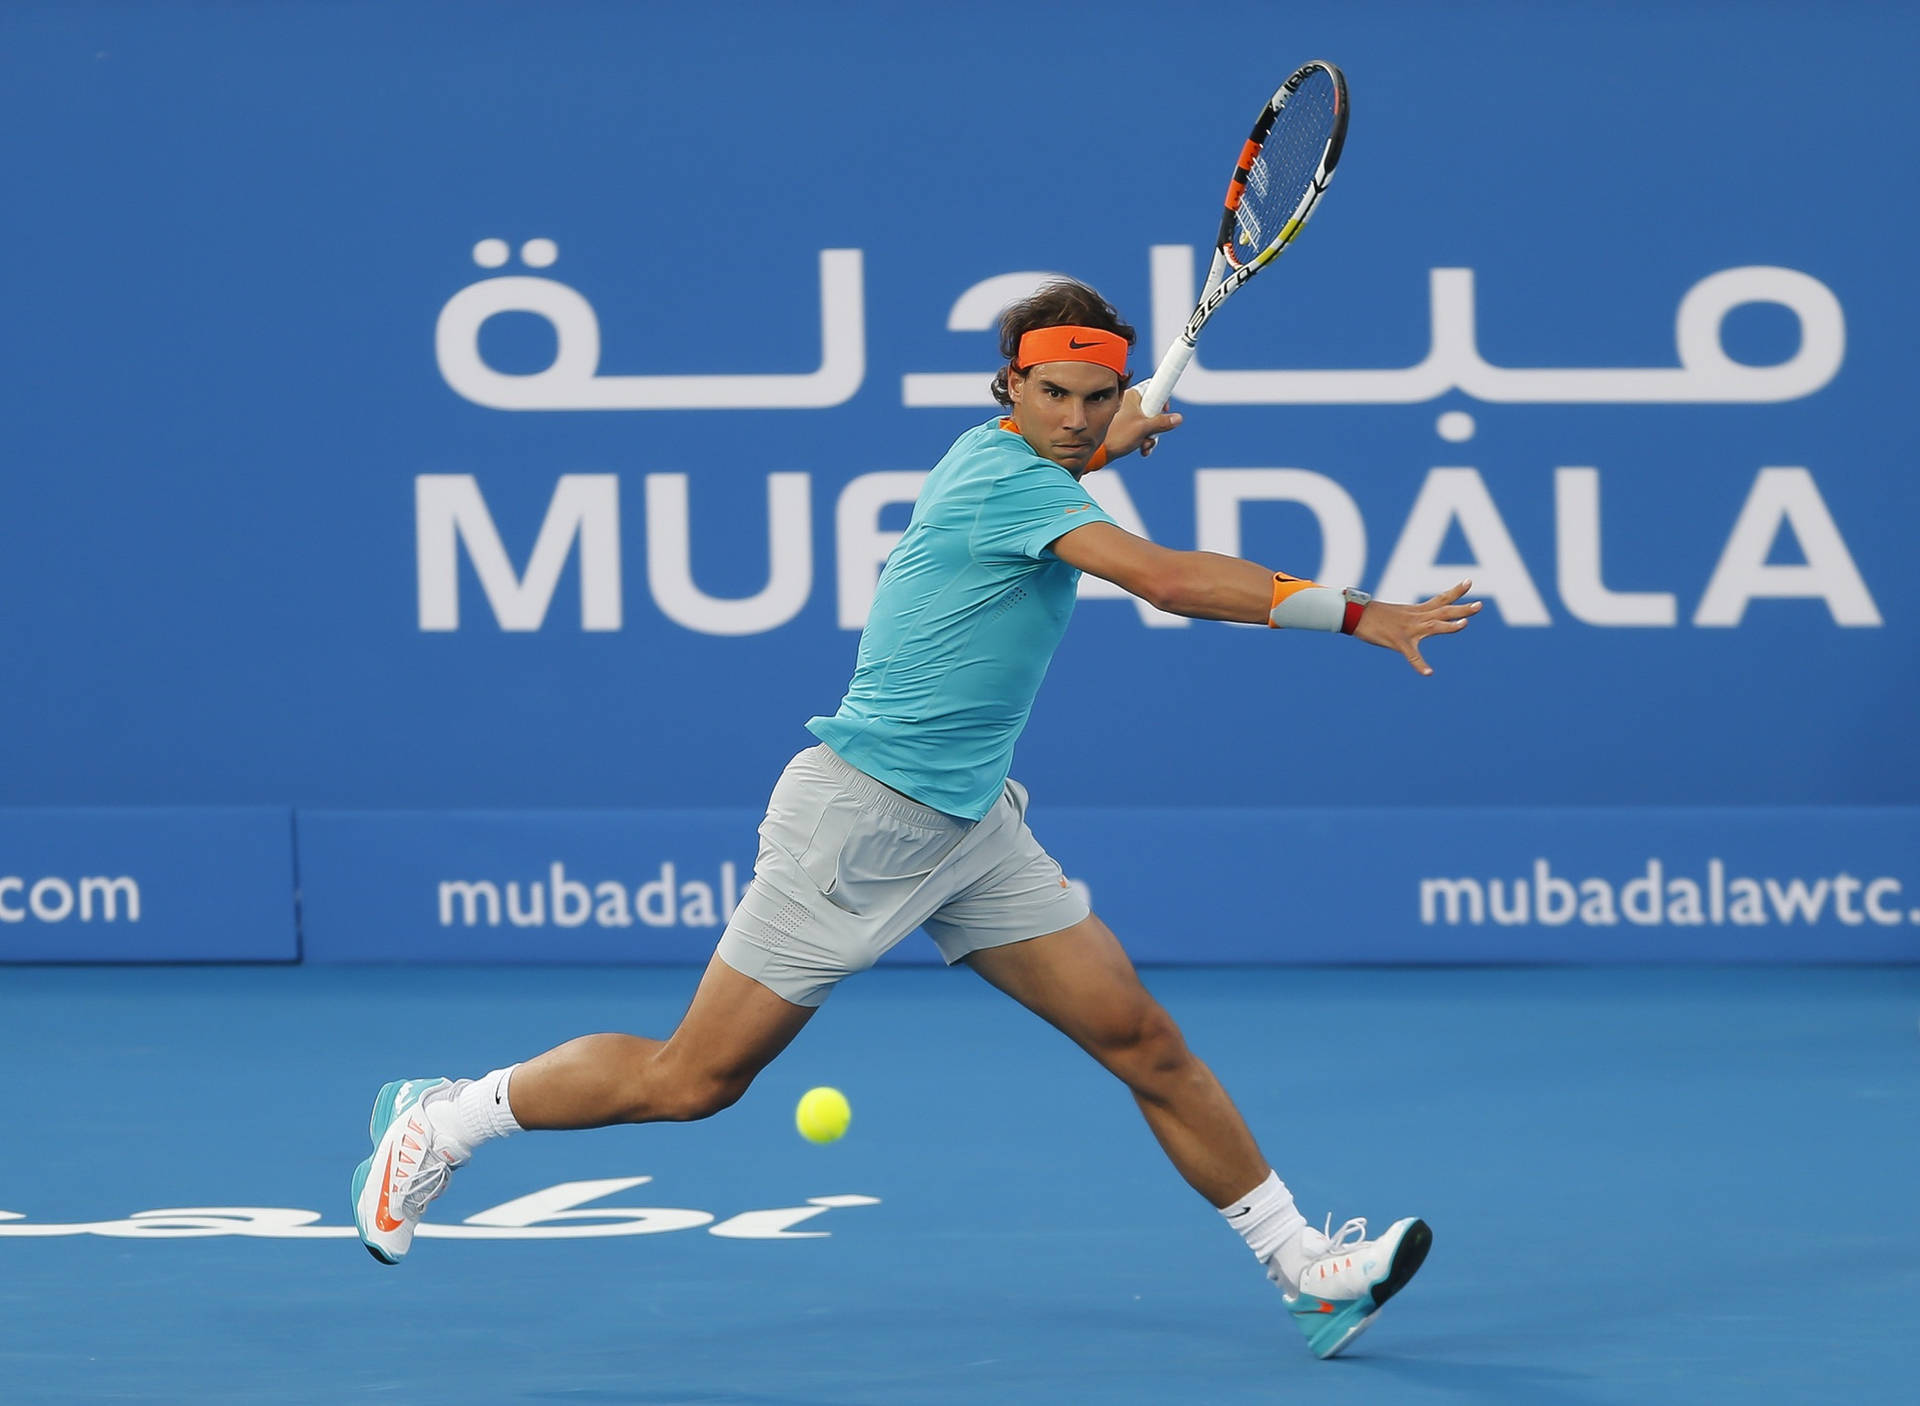 Rafael Nadal Legs Wide-open Pose Background